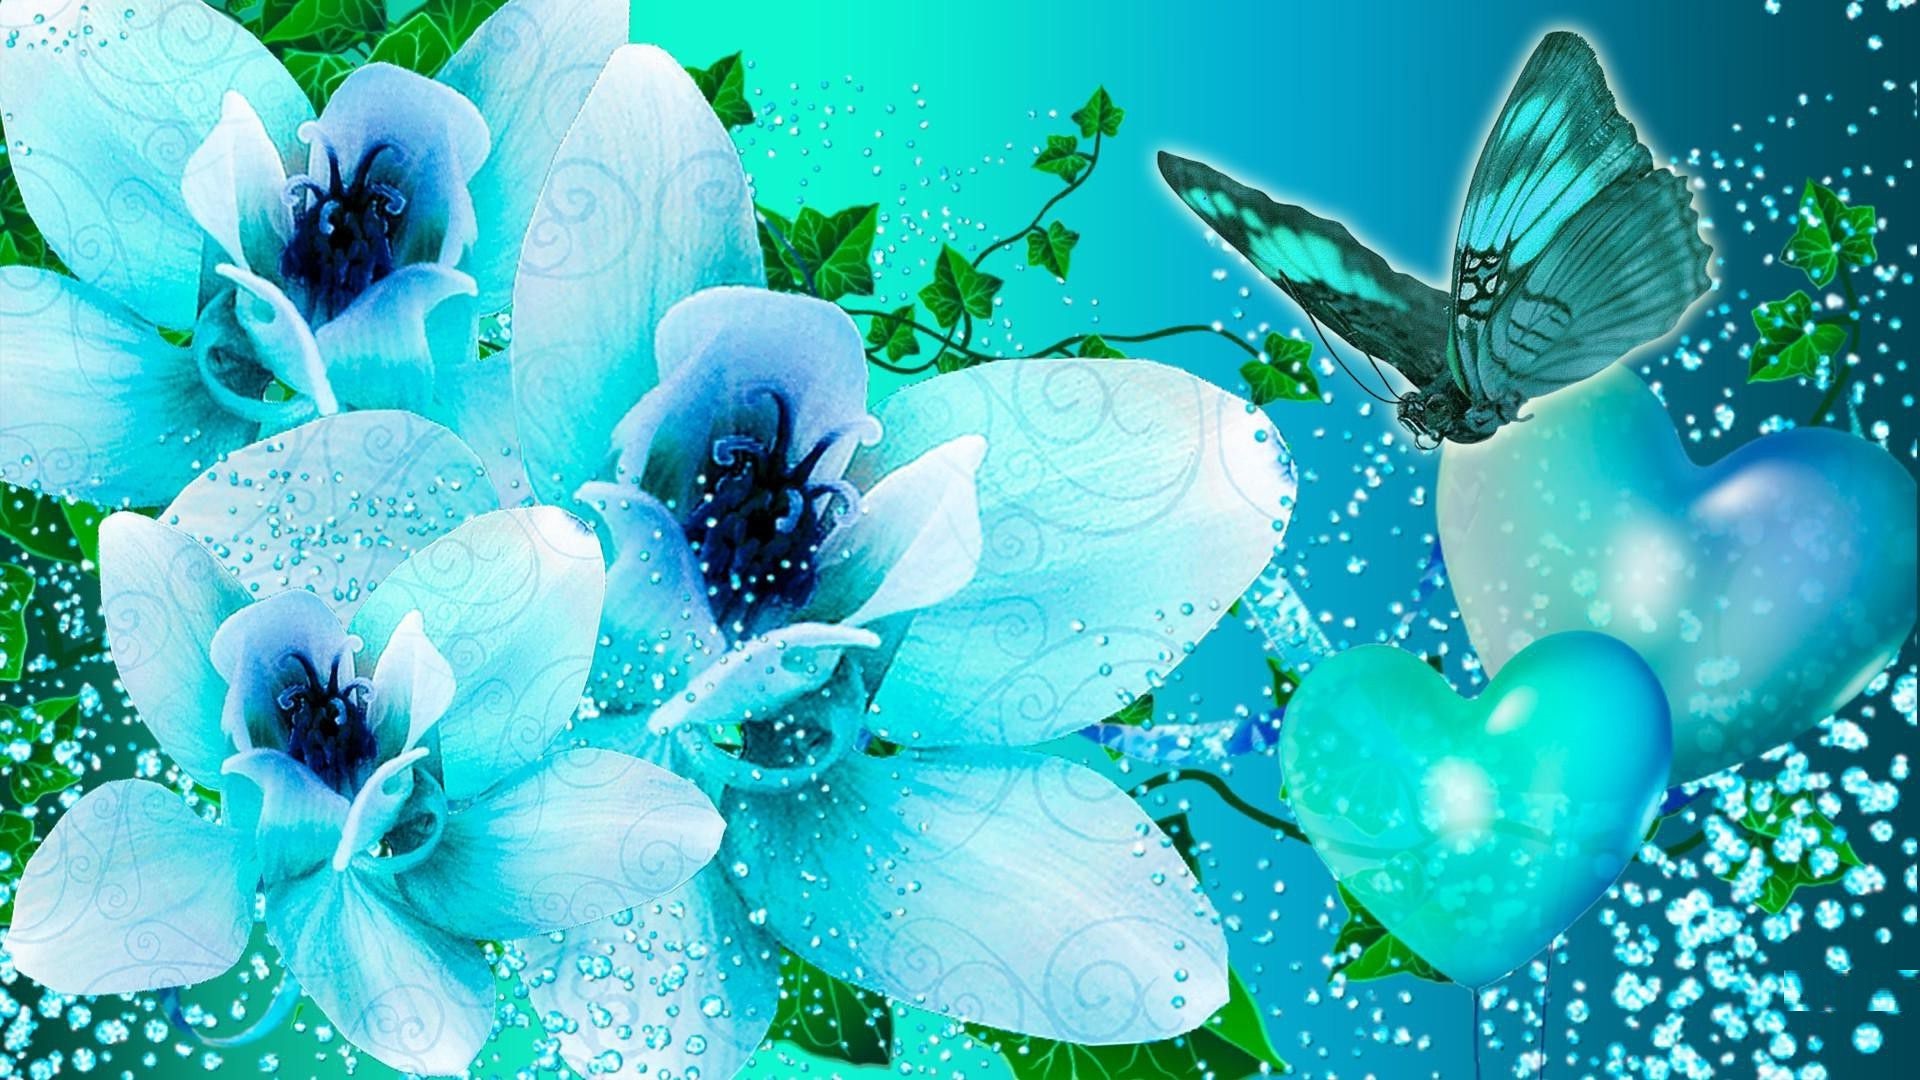 Blue Butterfly Hd Wallpapers Free Download - Wallpaper , HD Wallpaper & Backgrounds